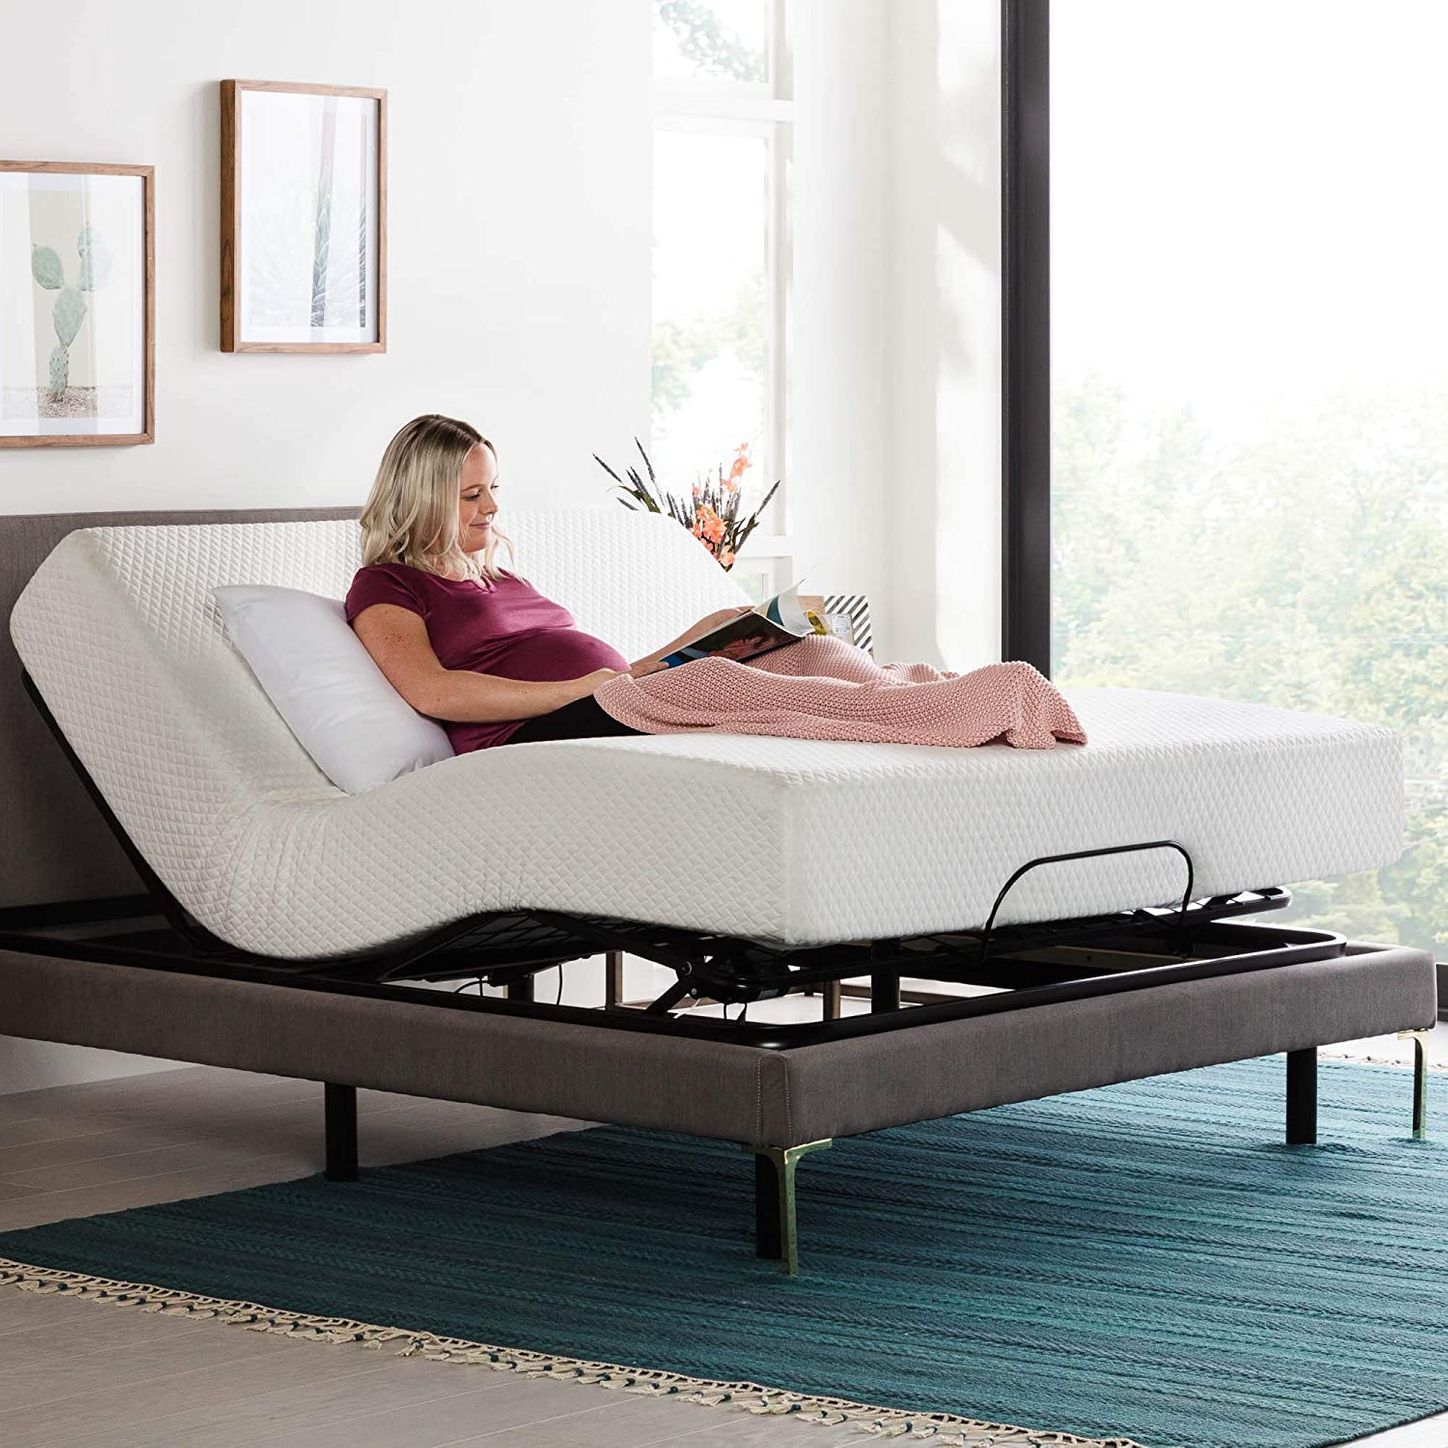 10 Best Adjustable Bed Bases 2021 The, Bed Frames That Work With Adjustable Beds